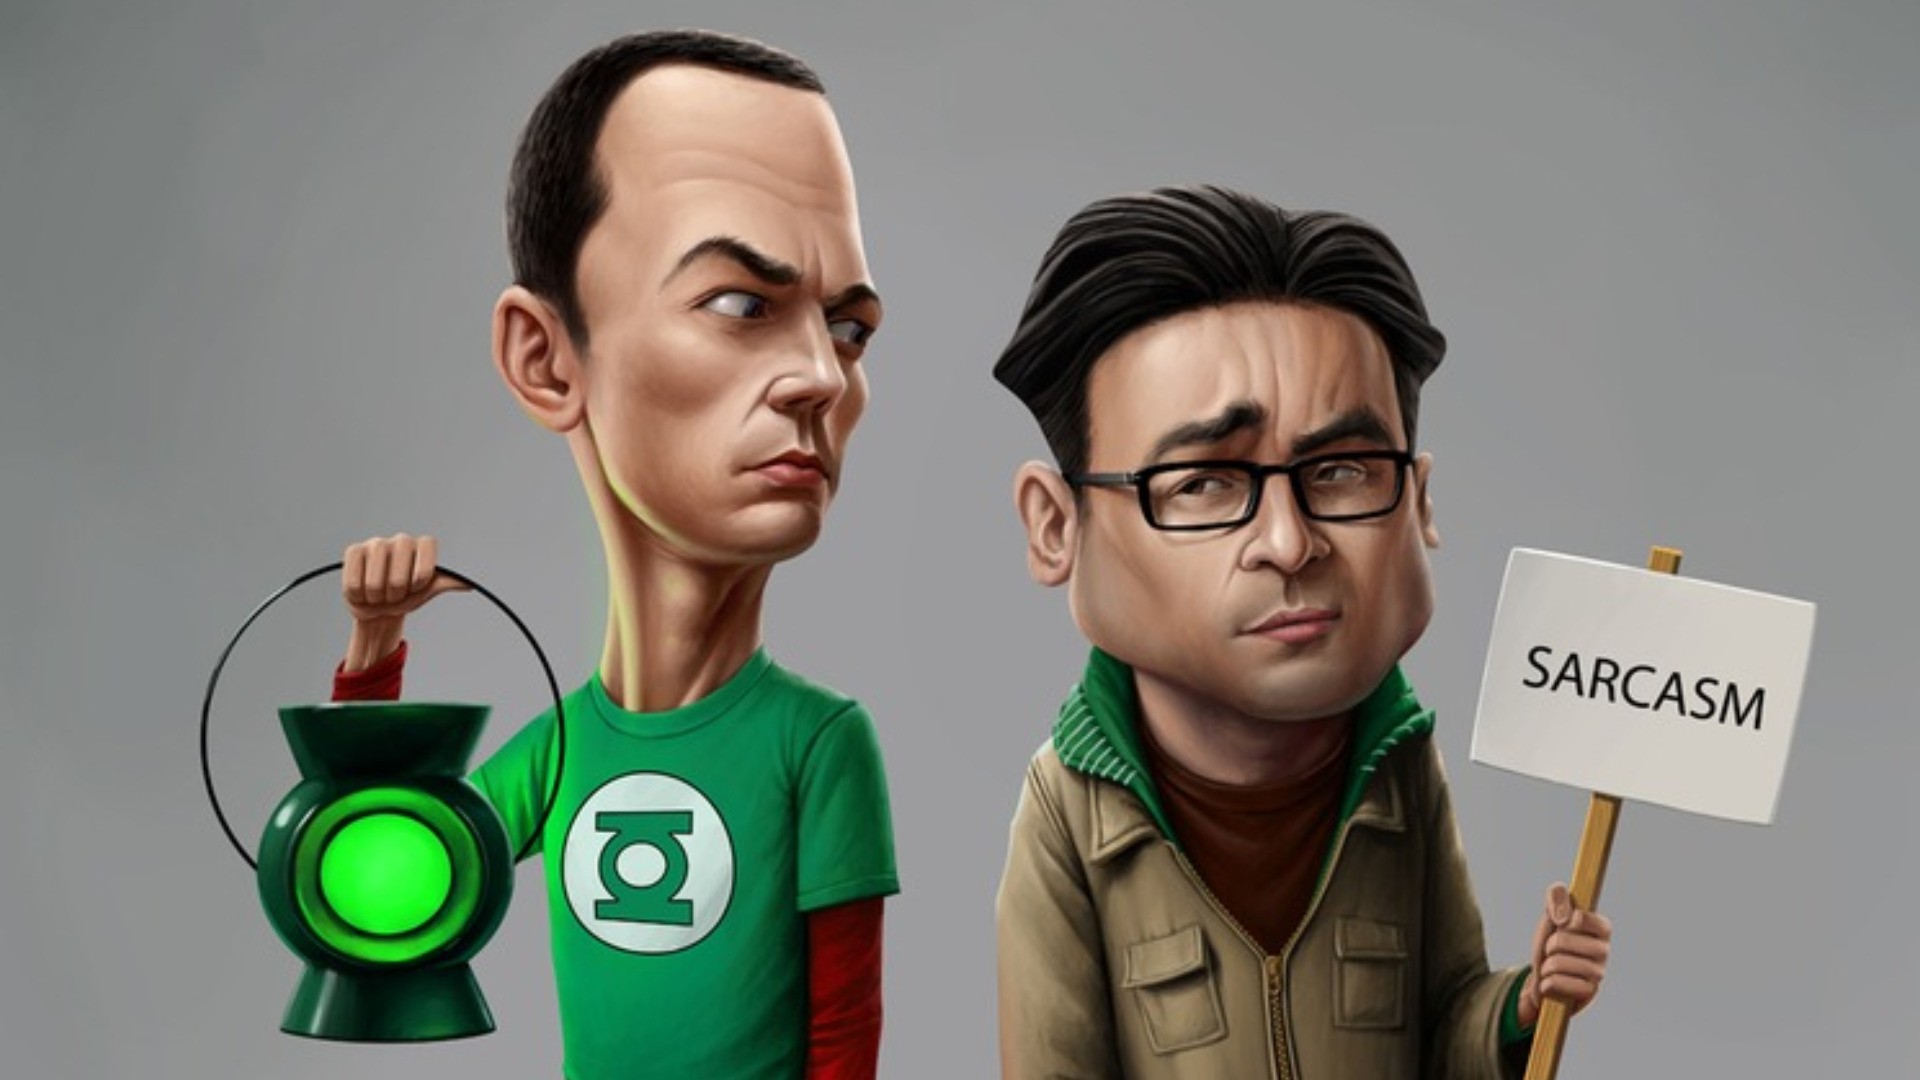 General 1920x1080 The Big Bang Theory sarcasm HUMOR Sheldon Cooper Leonard Hofstadter TV series gray background